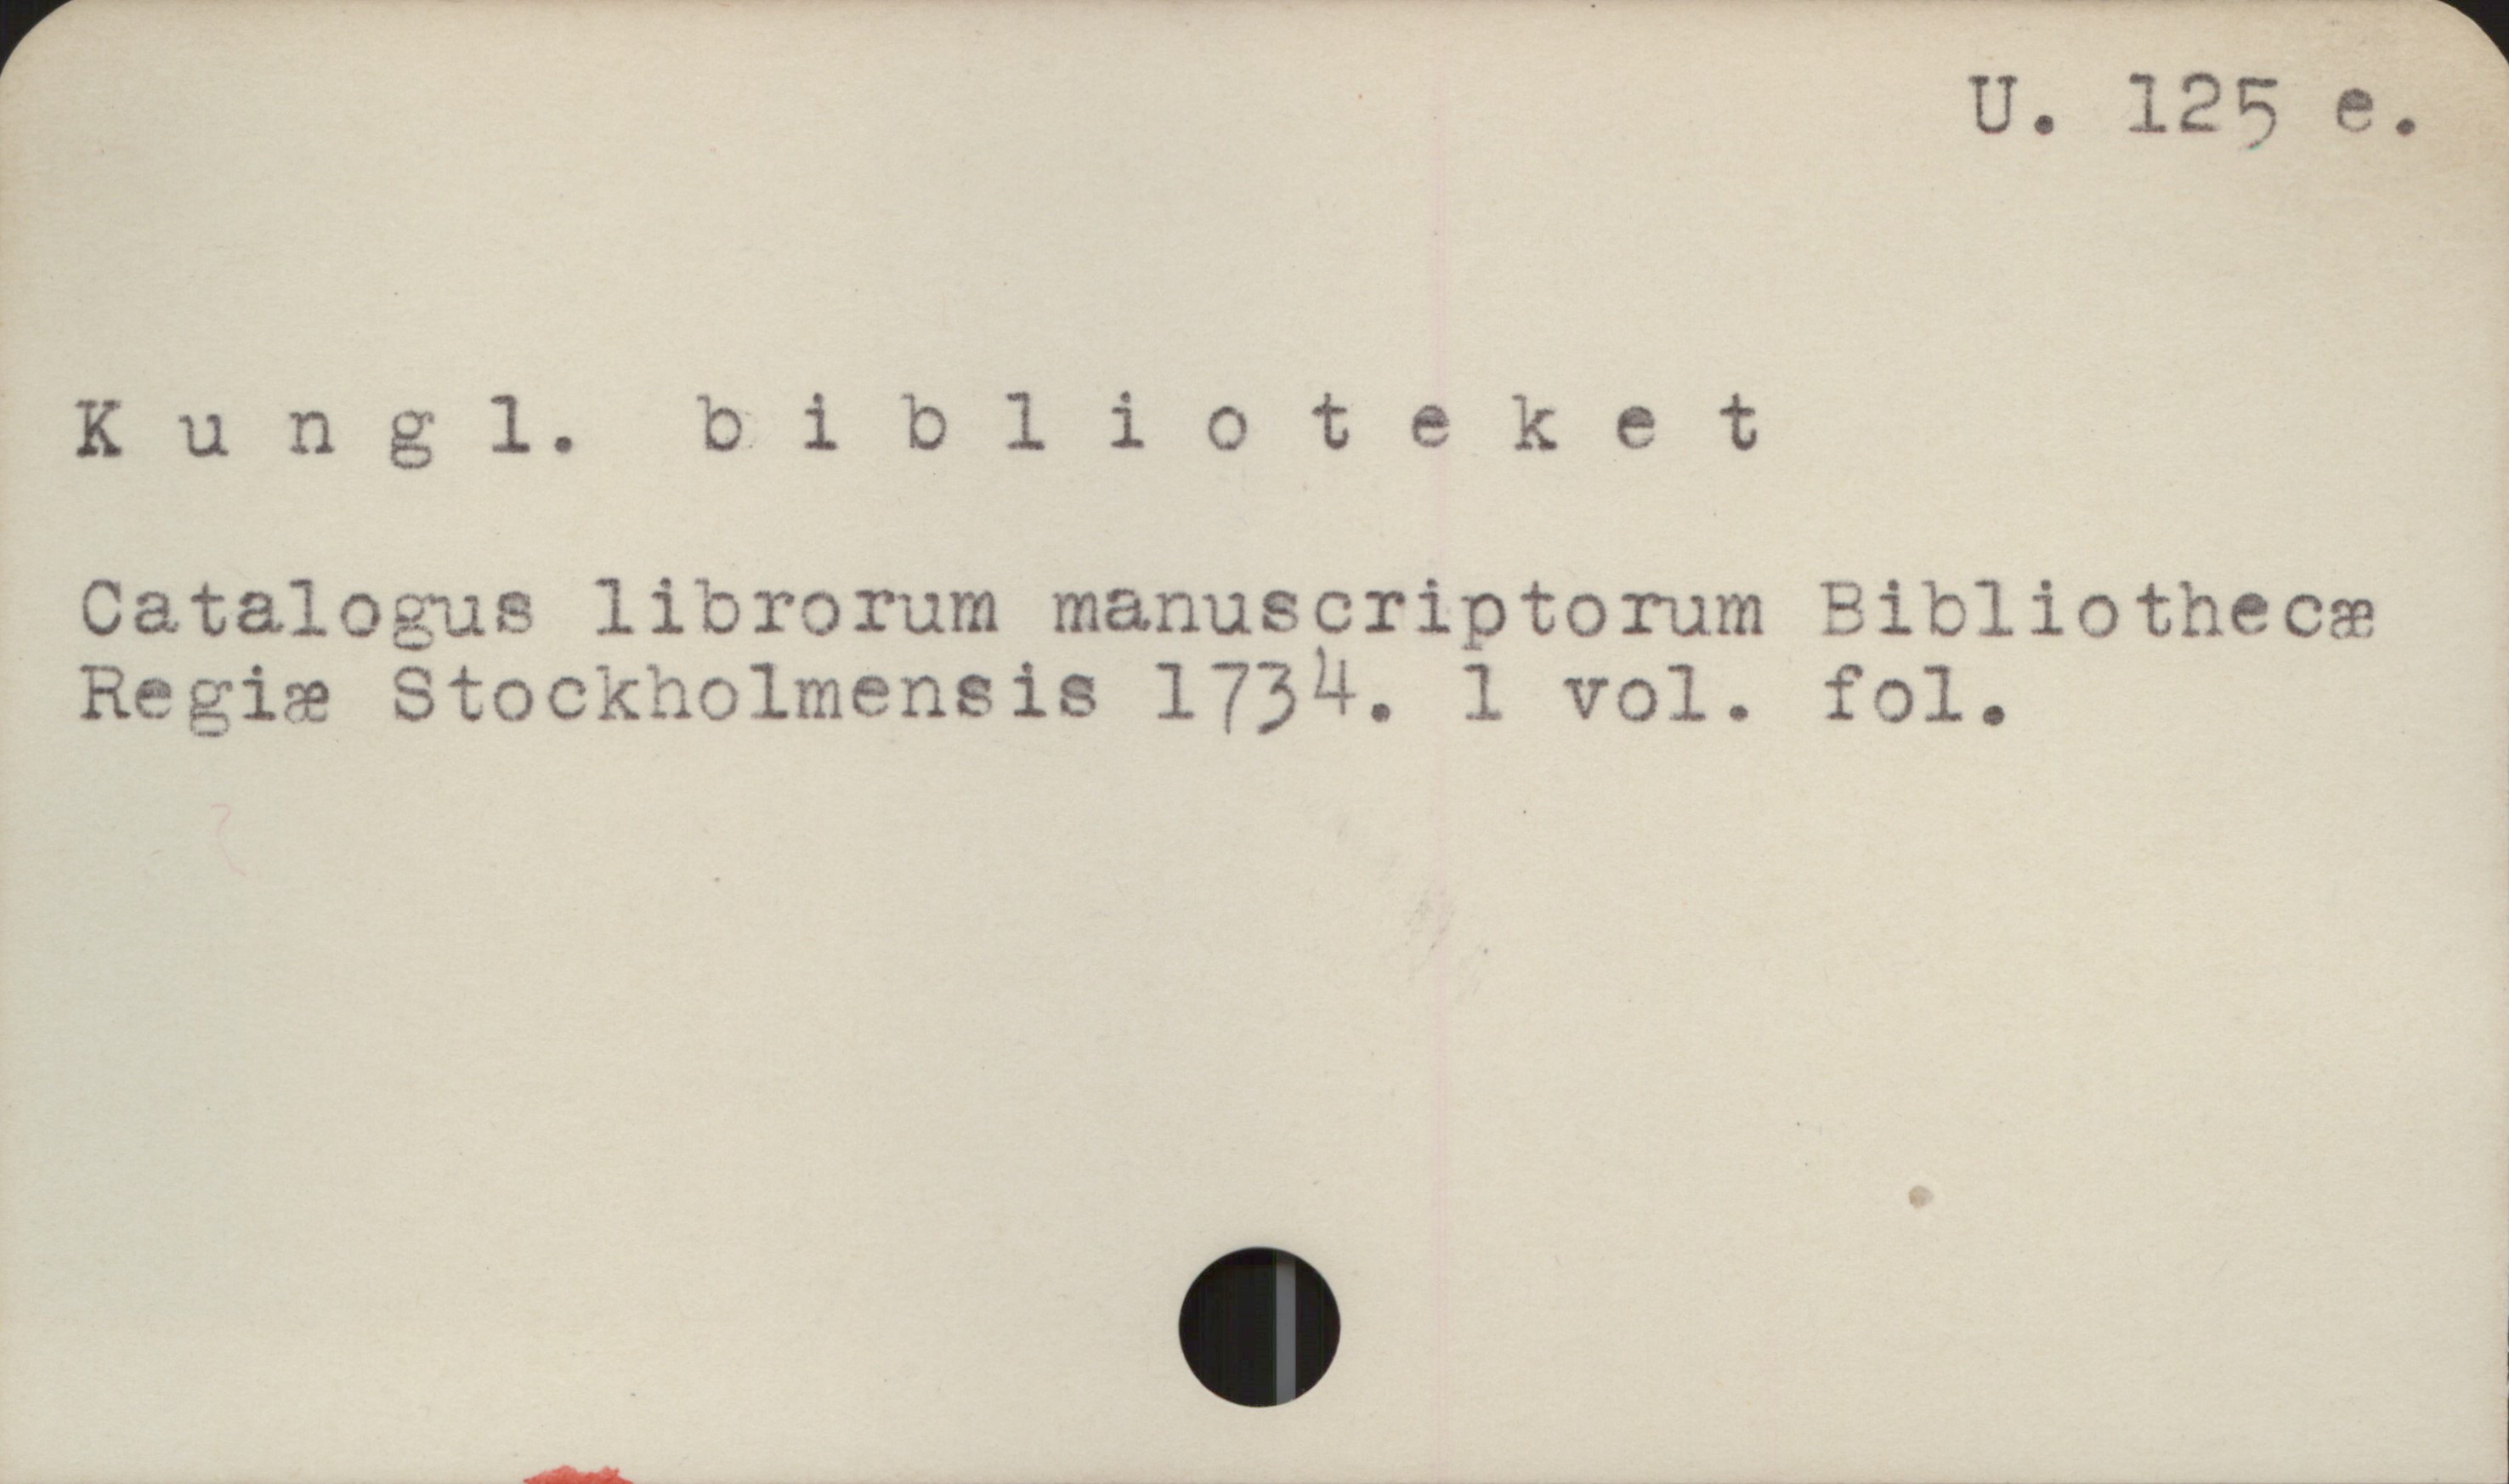  . ' U. 125 e.
Kungl. 9 i Dlioteket

Catalogus librorum manuscriptorum Sibliothecæ
Regiæ Stocknolmensis 1734. 1 vol. fol.

